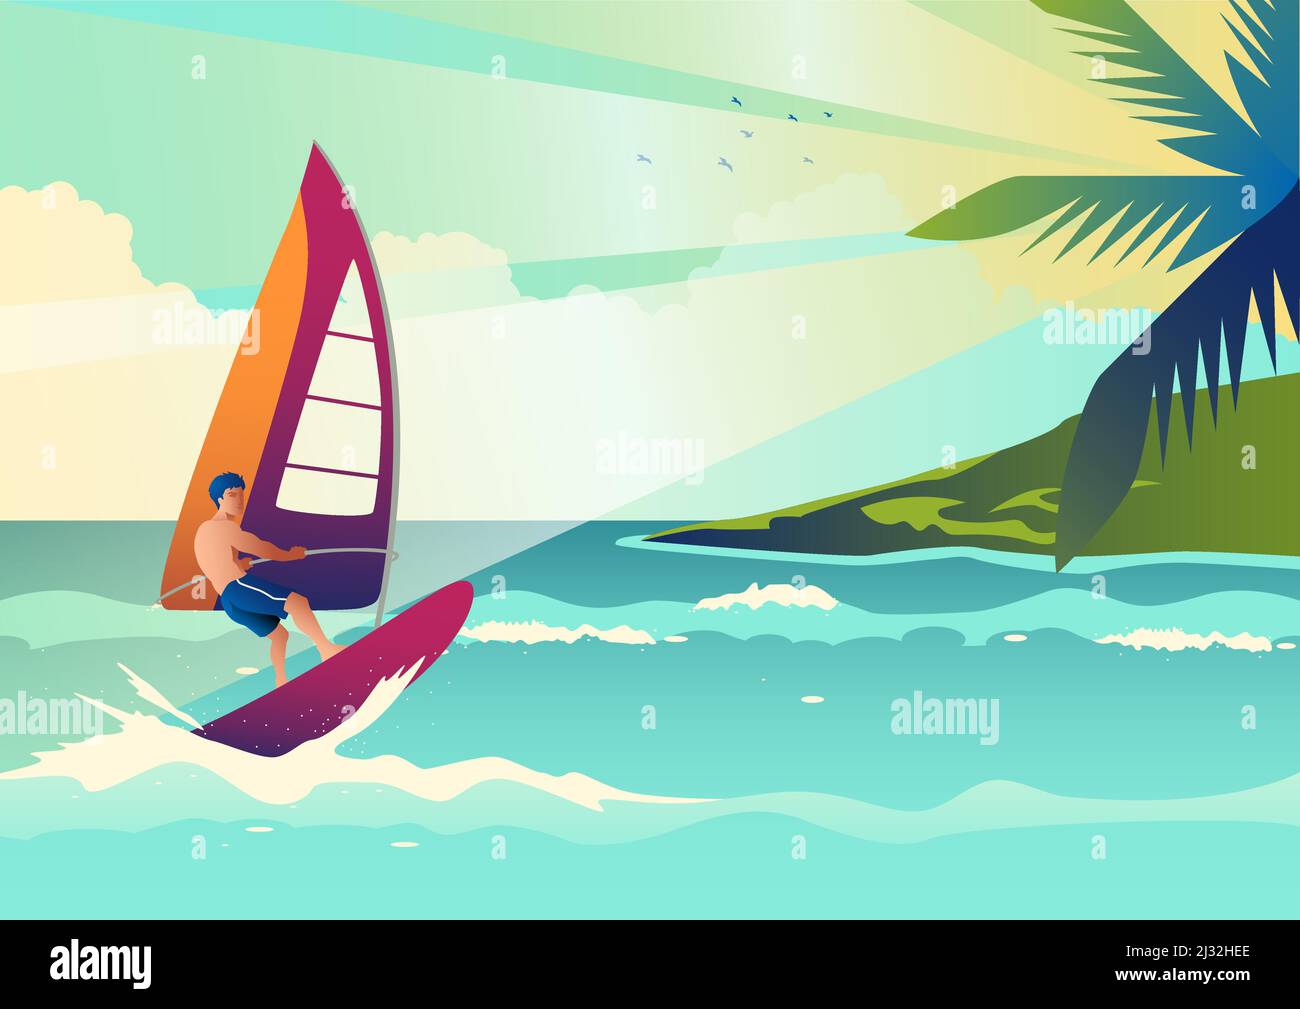 Illustration of a wind surfer, art deco style vector illustration Stock Vector